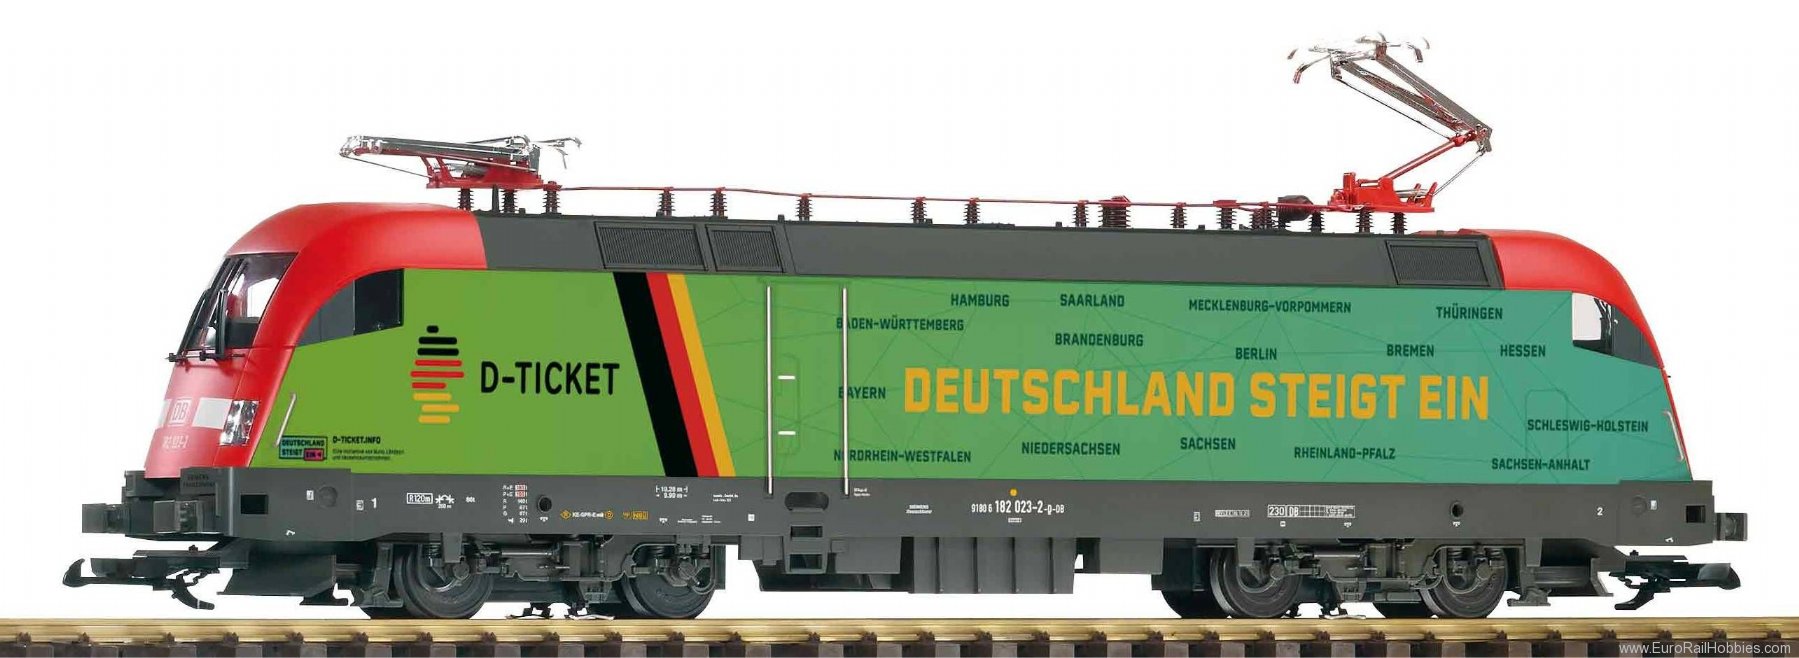 Piko 37401 G Electric locomotive Taurus Germany ticket D